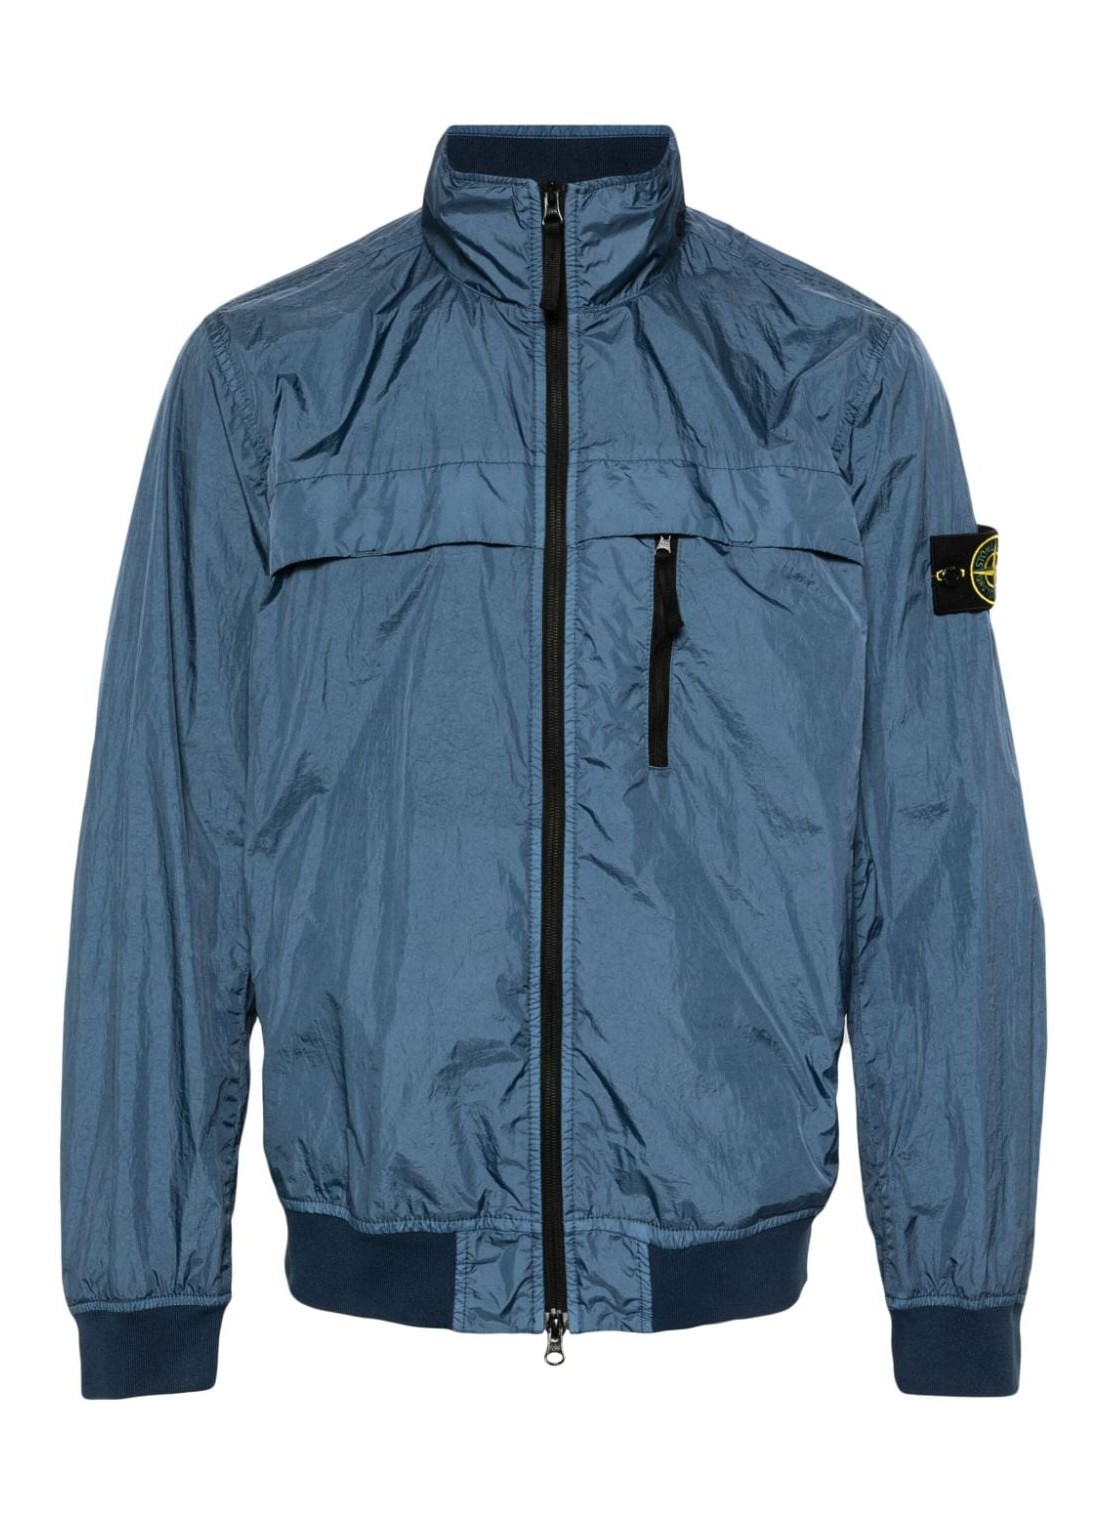 Outerwear stone island outerwear man jacket 801541022 v0024 talla M
 